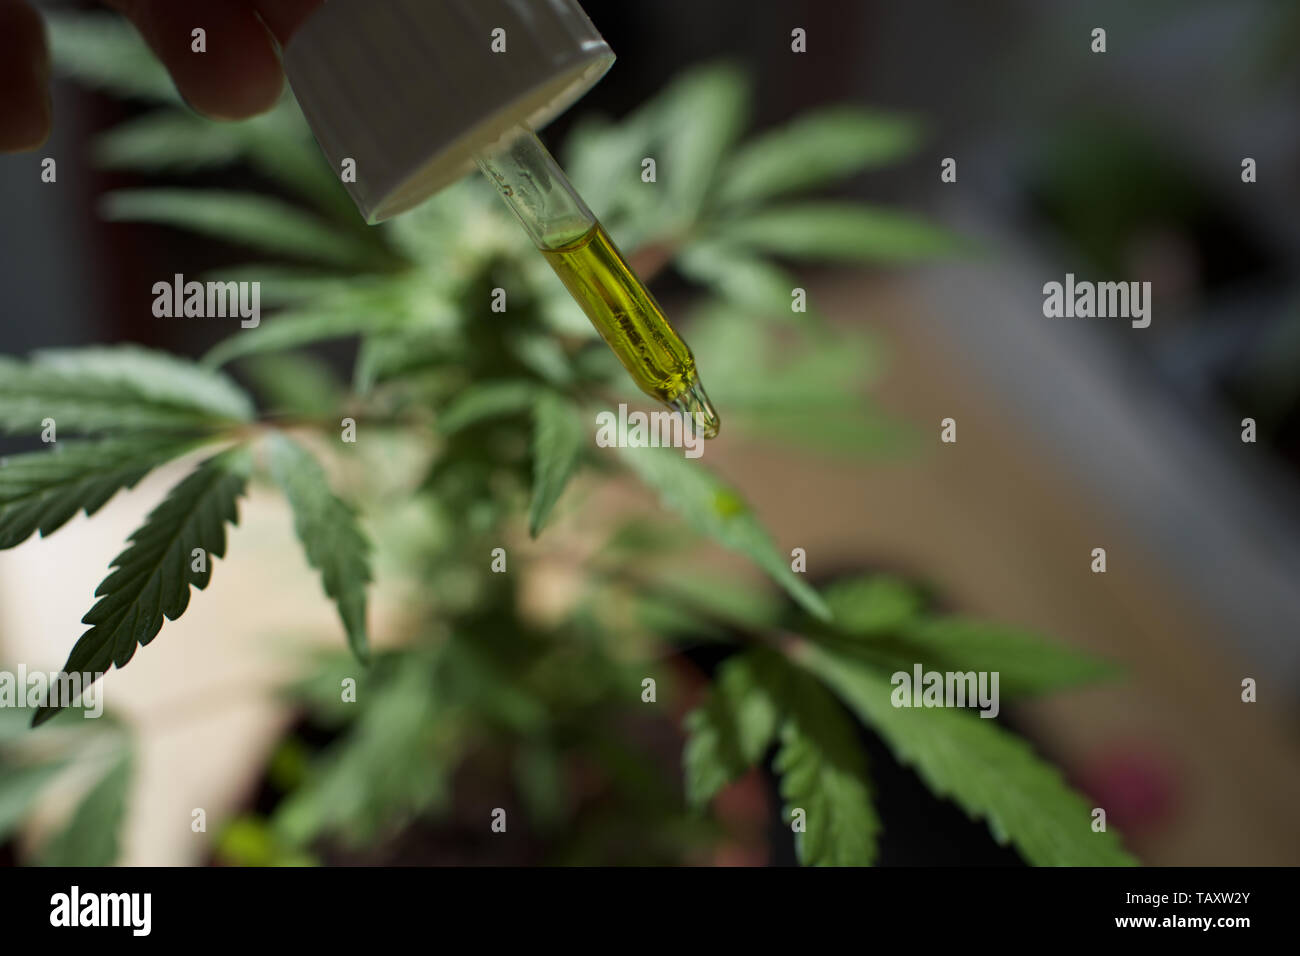 Female cannabis plant with CBD oil dropper Stock Photo